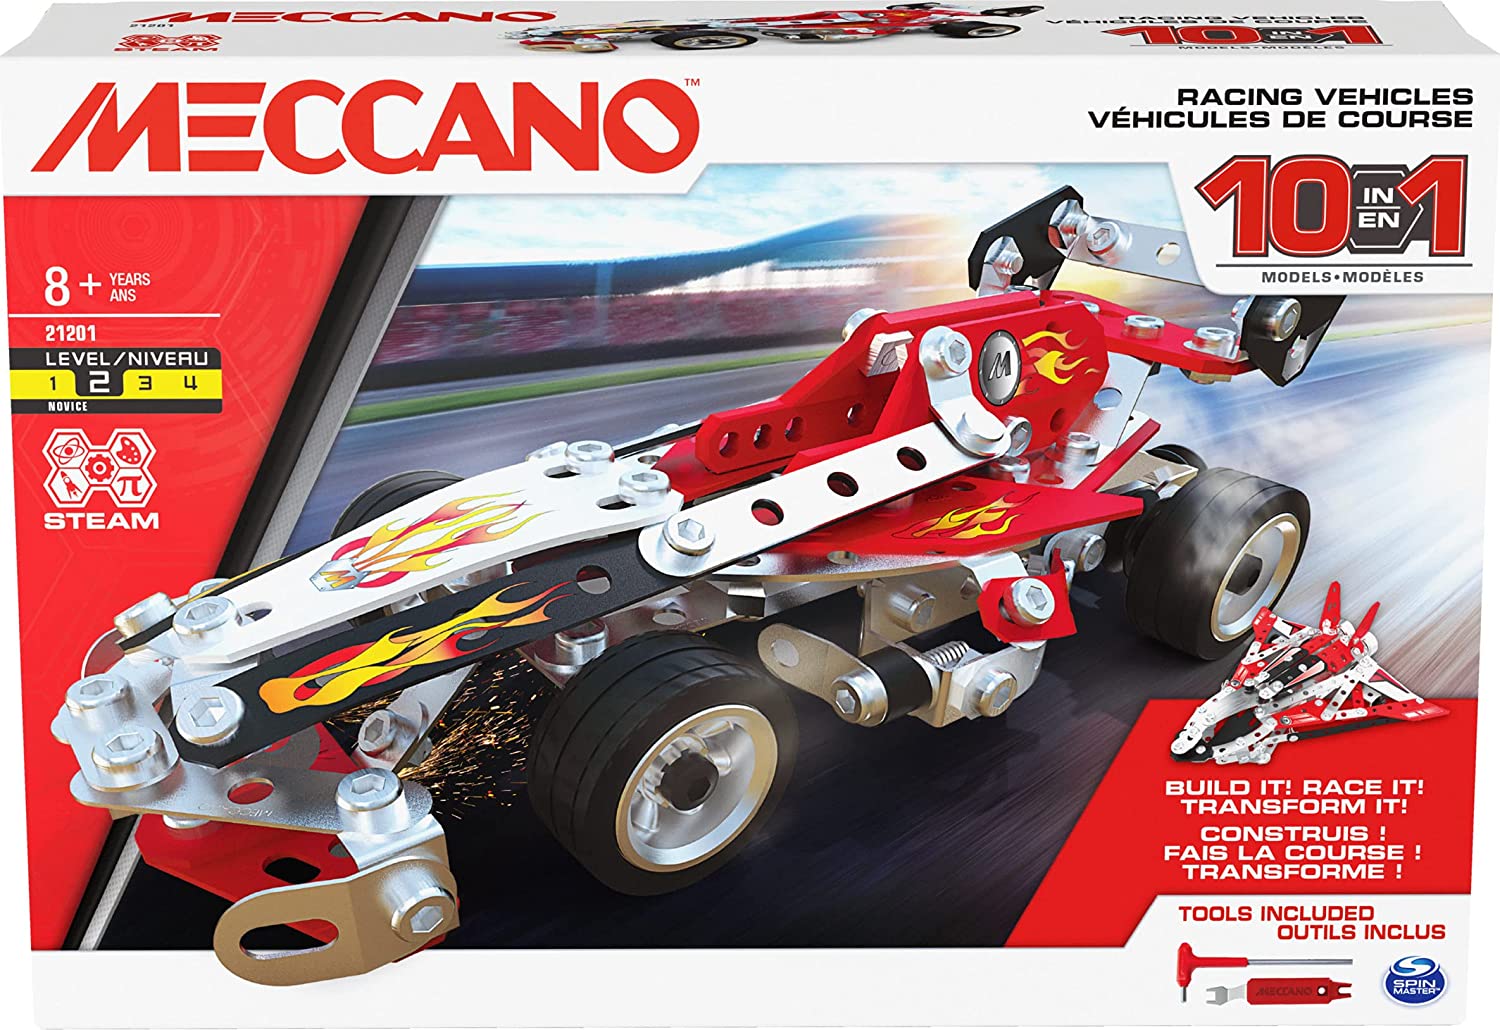 Racing Vehicles 10 Models Meccano 6060104